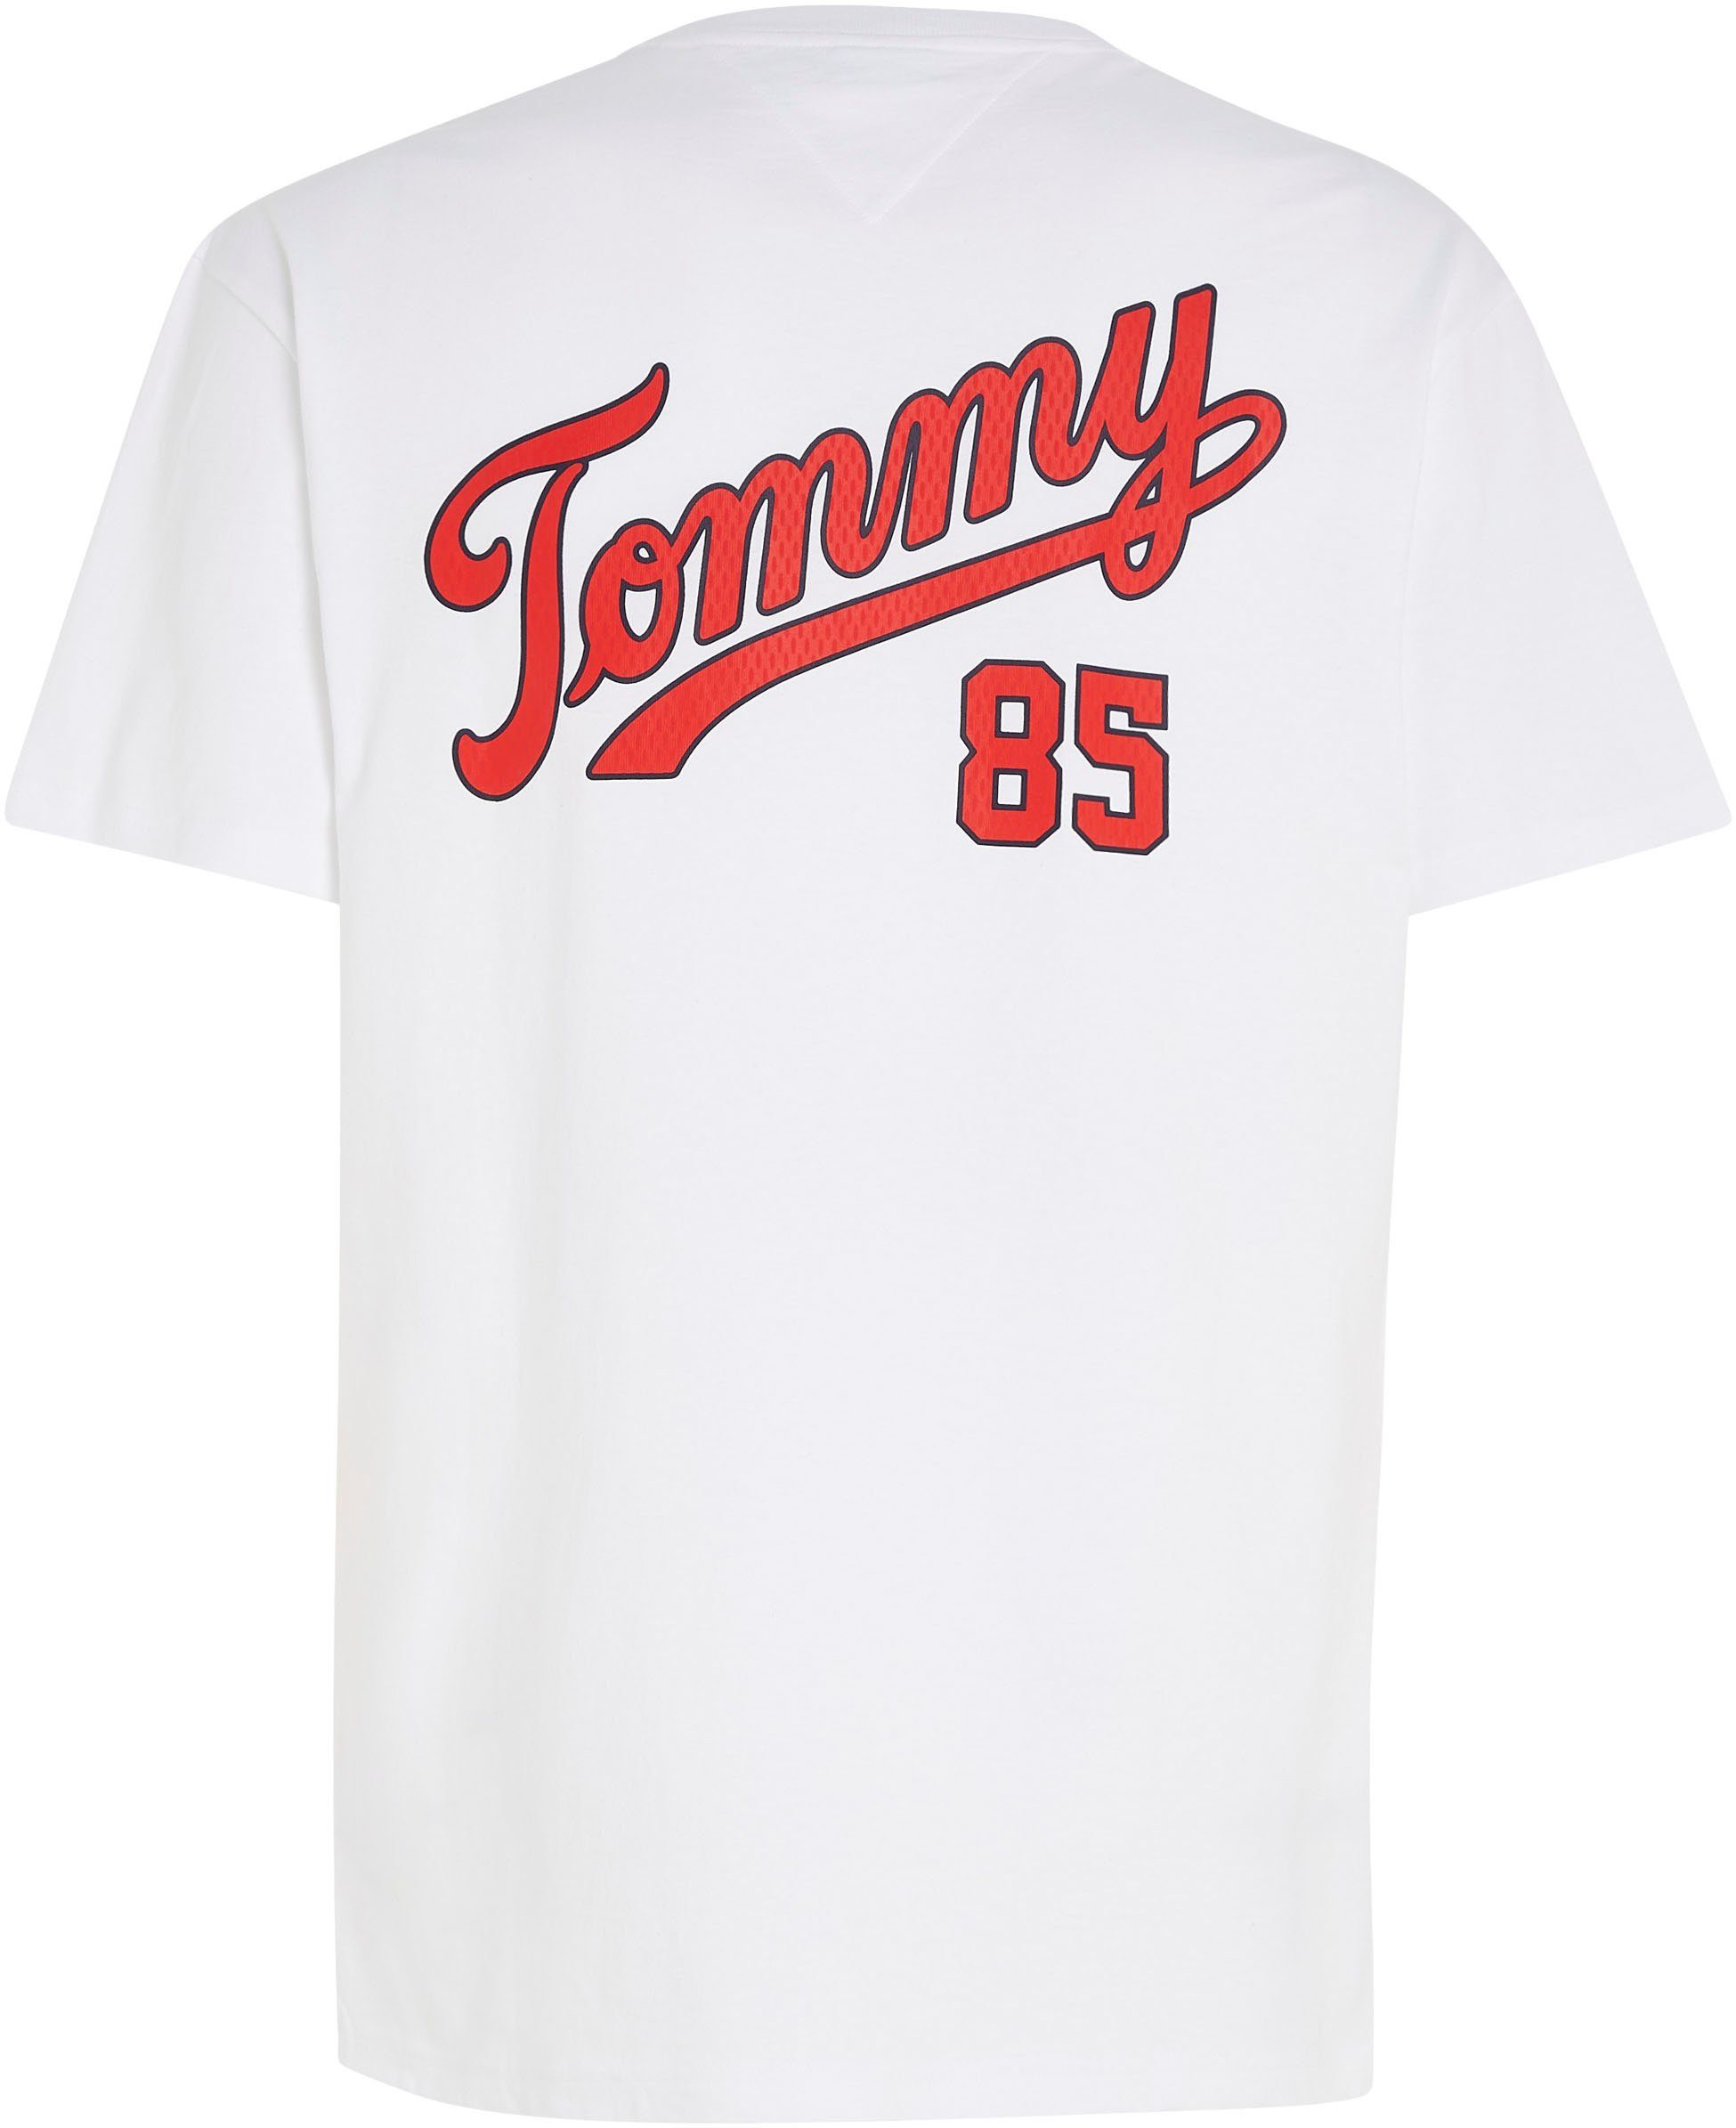 Tommy COLLEGE Jeans CLSC White TJM mit LOGO T-Shirt 85 Logoprint TEE